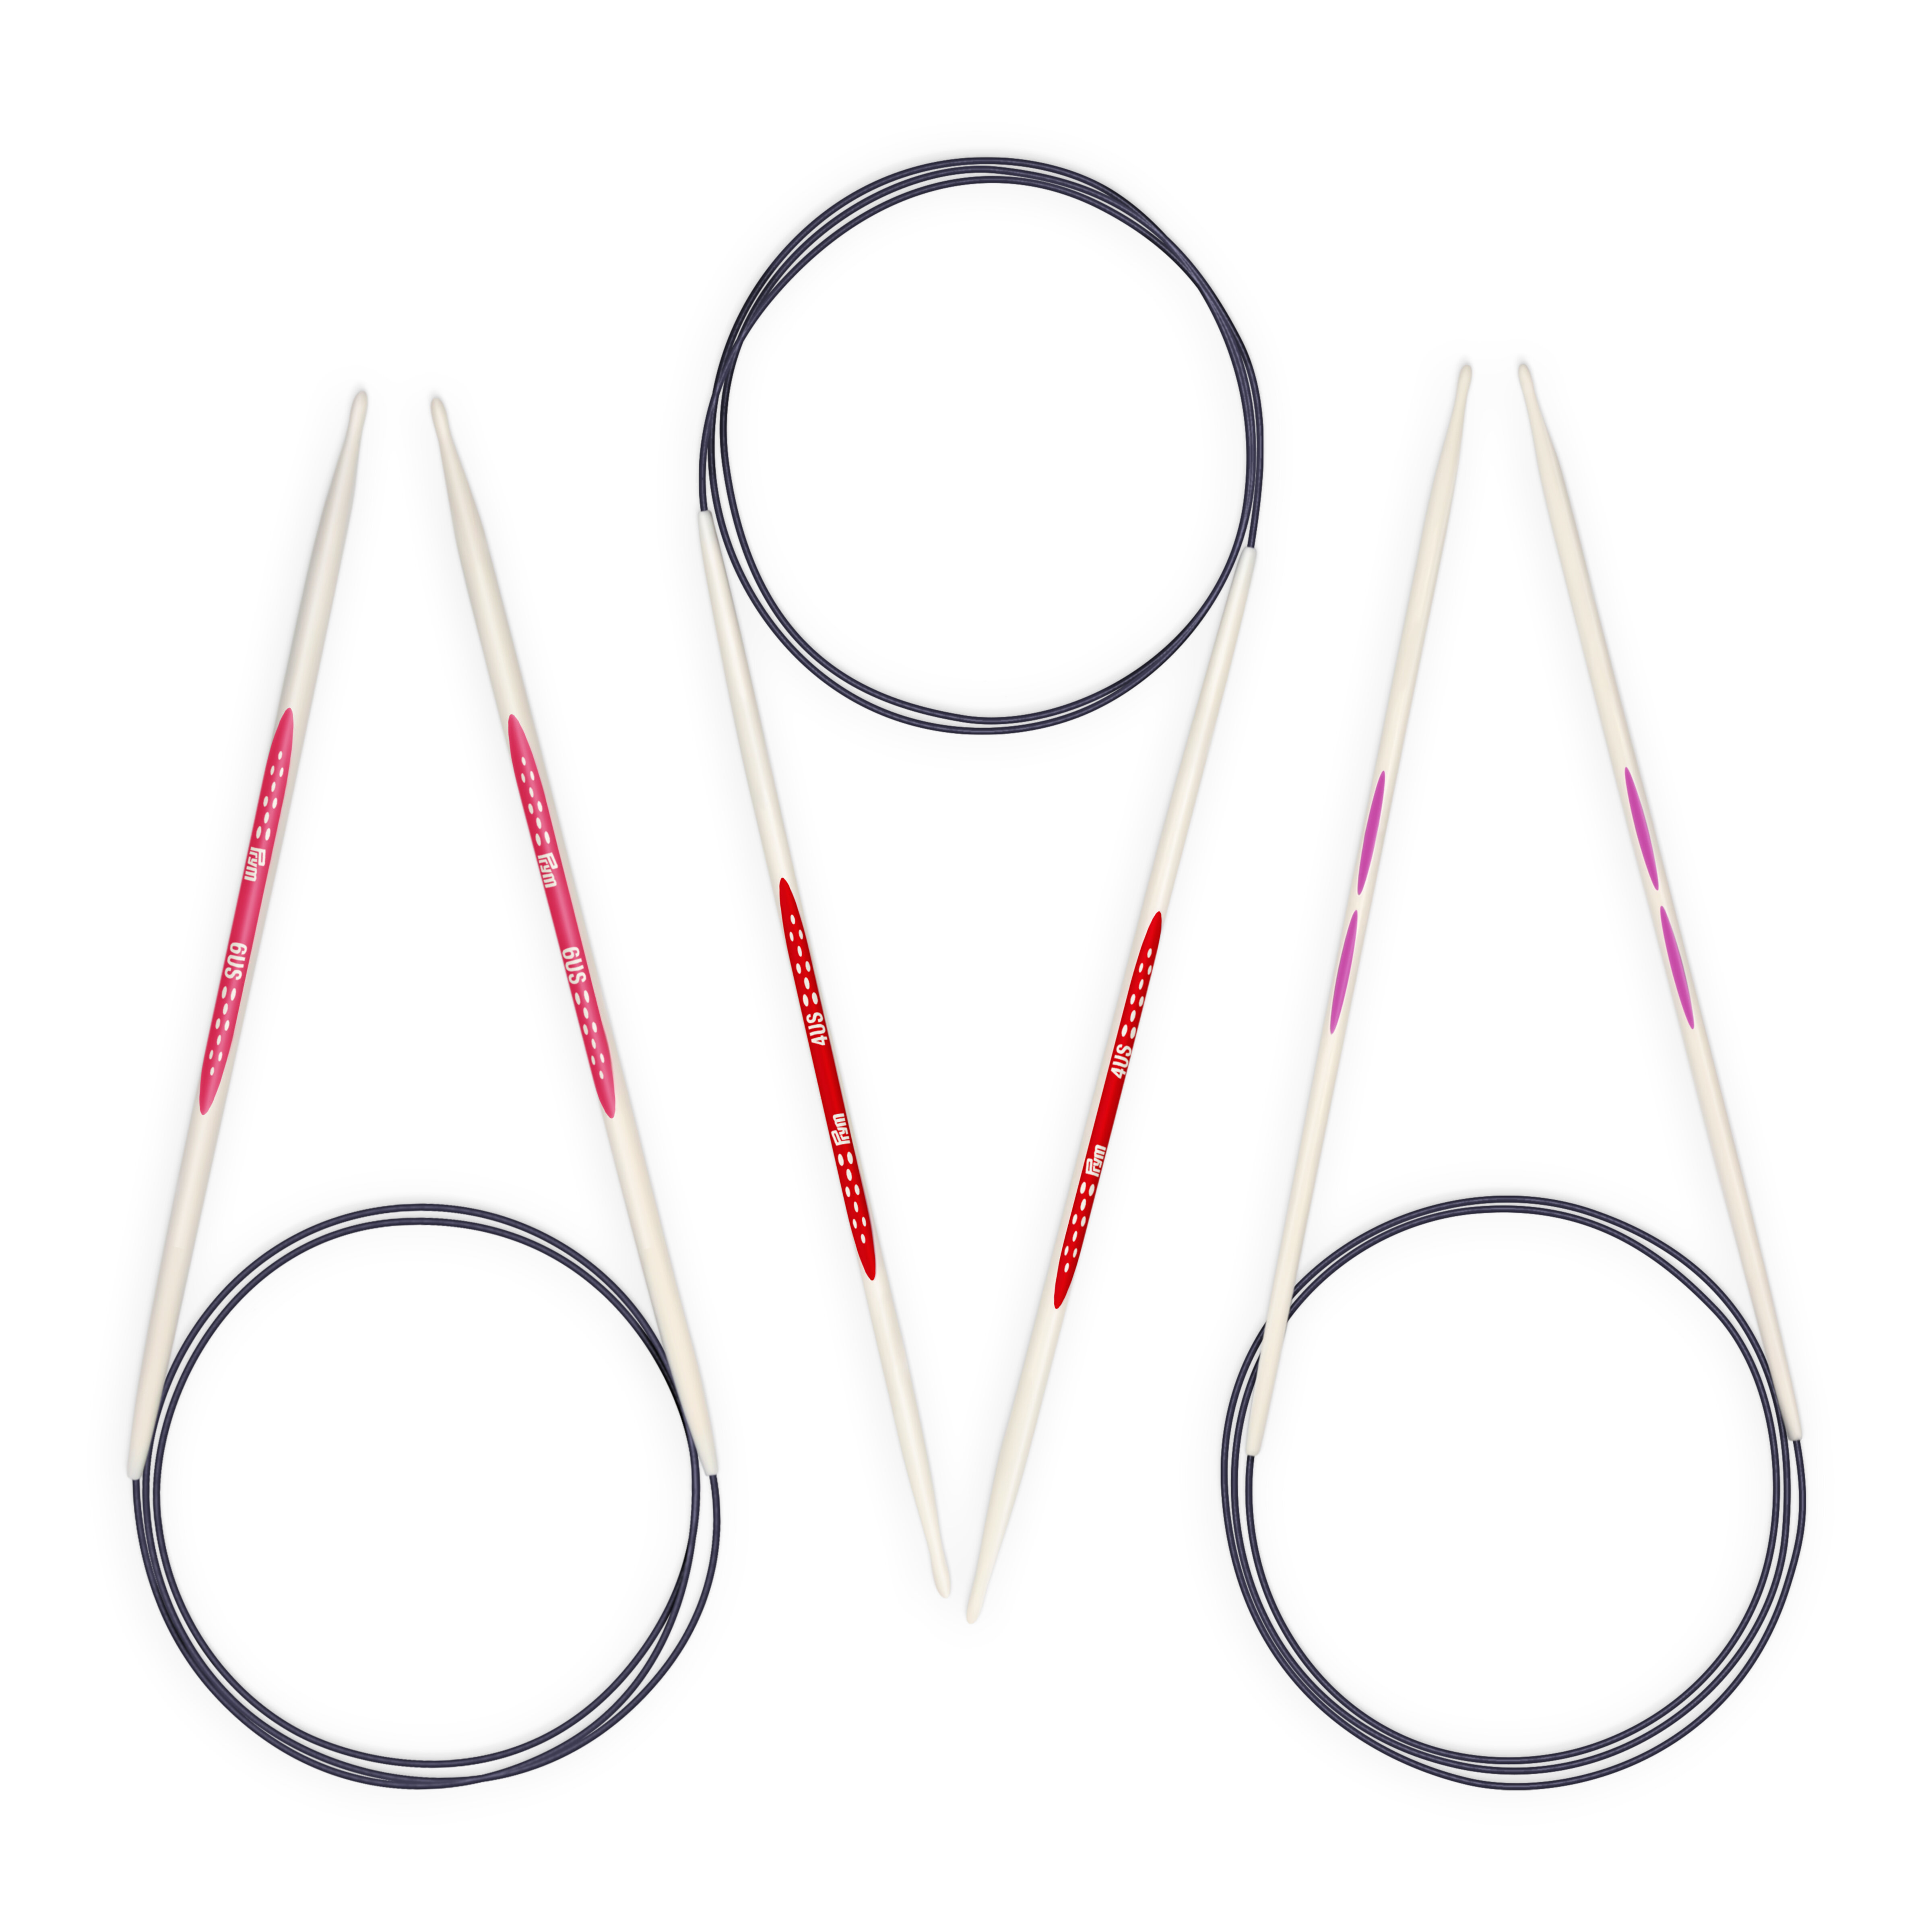 Prym Ergonomics 8 Double Point Knitting Needles Set, Size US 1, 2, 4 & 6 &  Reviews